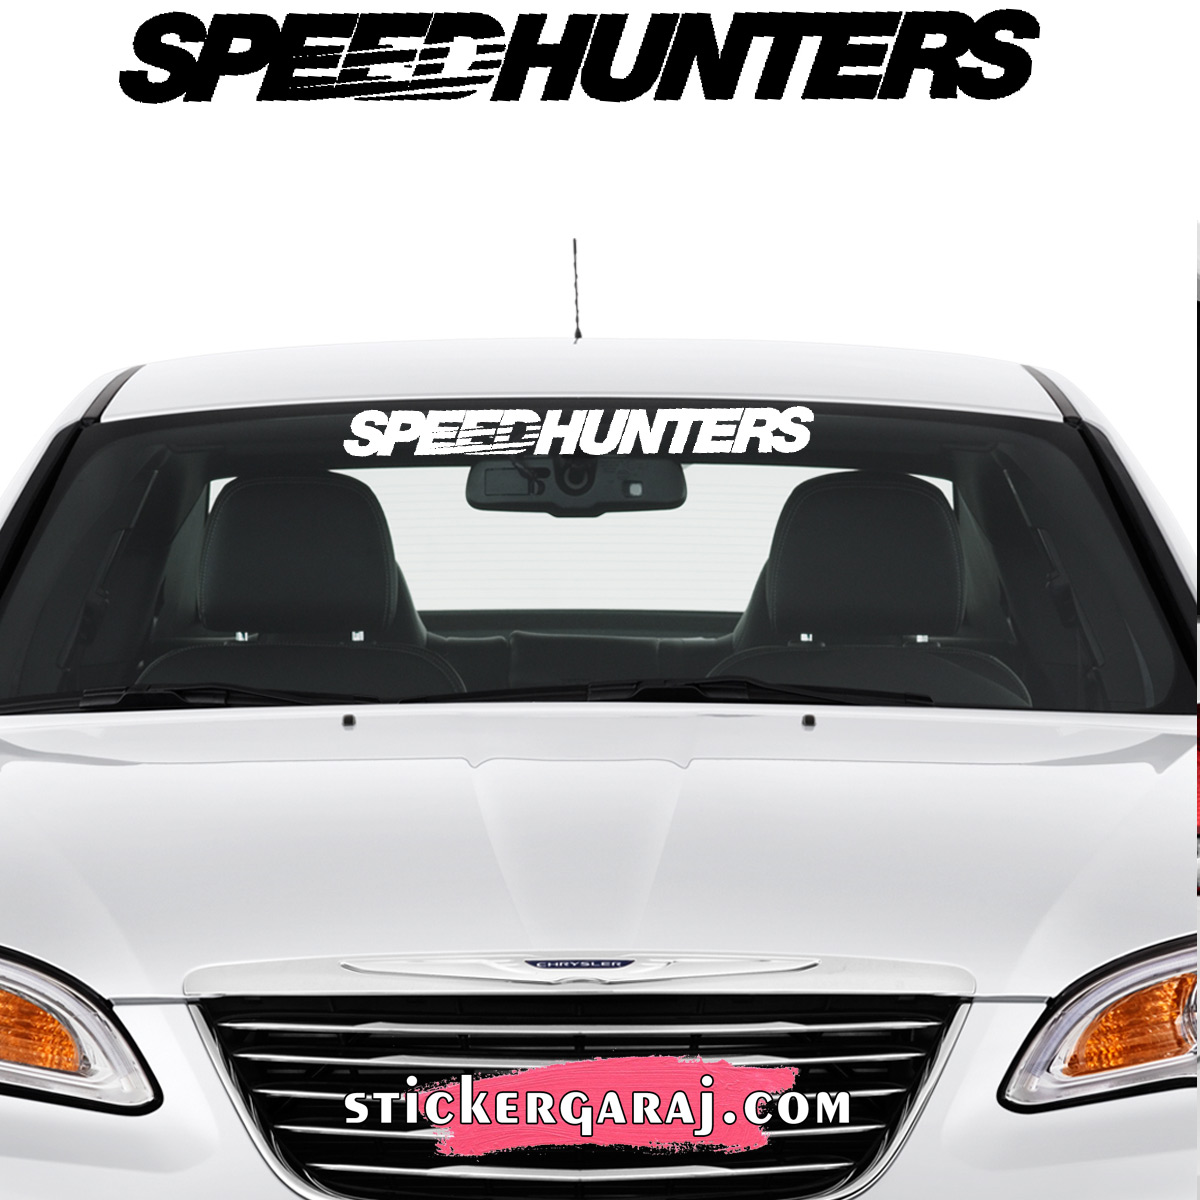 Mazda oto sticker 1 - Mazda cam sticker - speedhunters